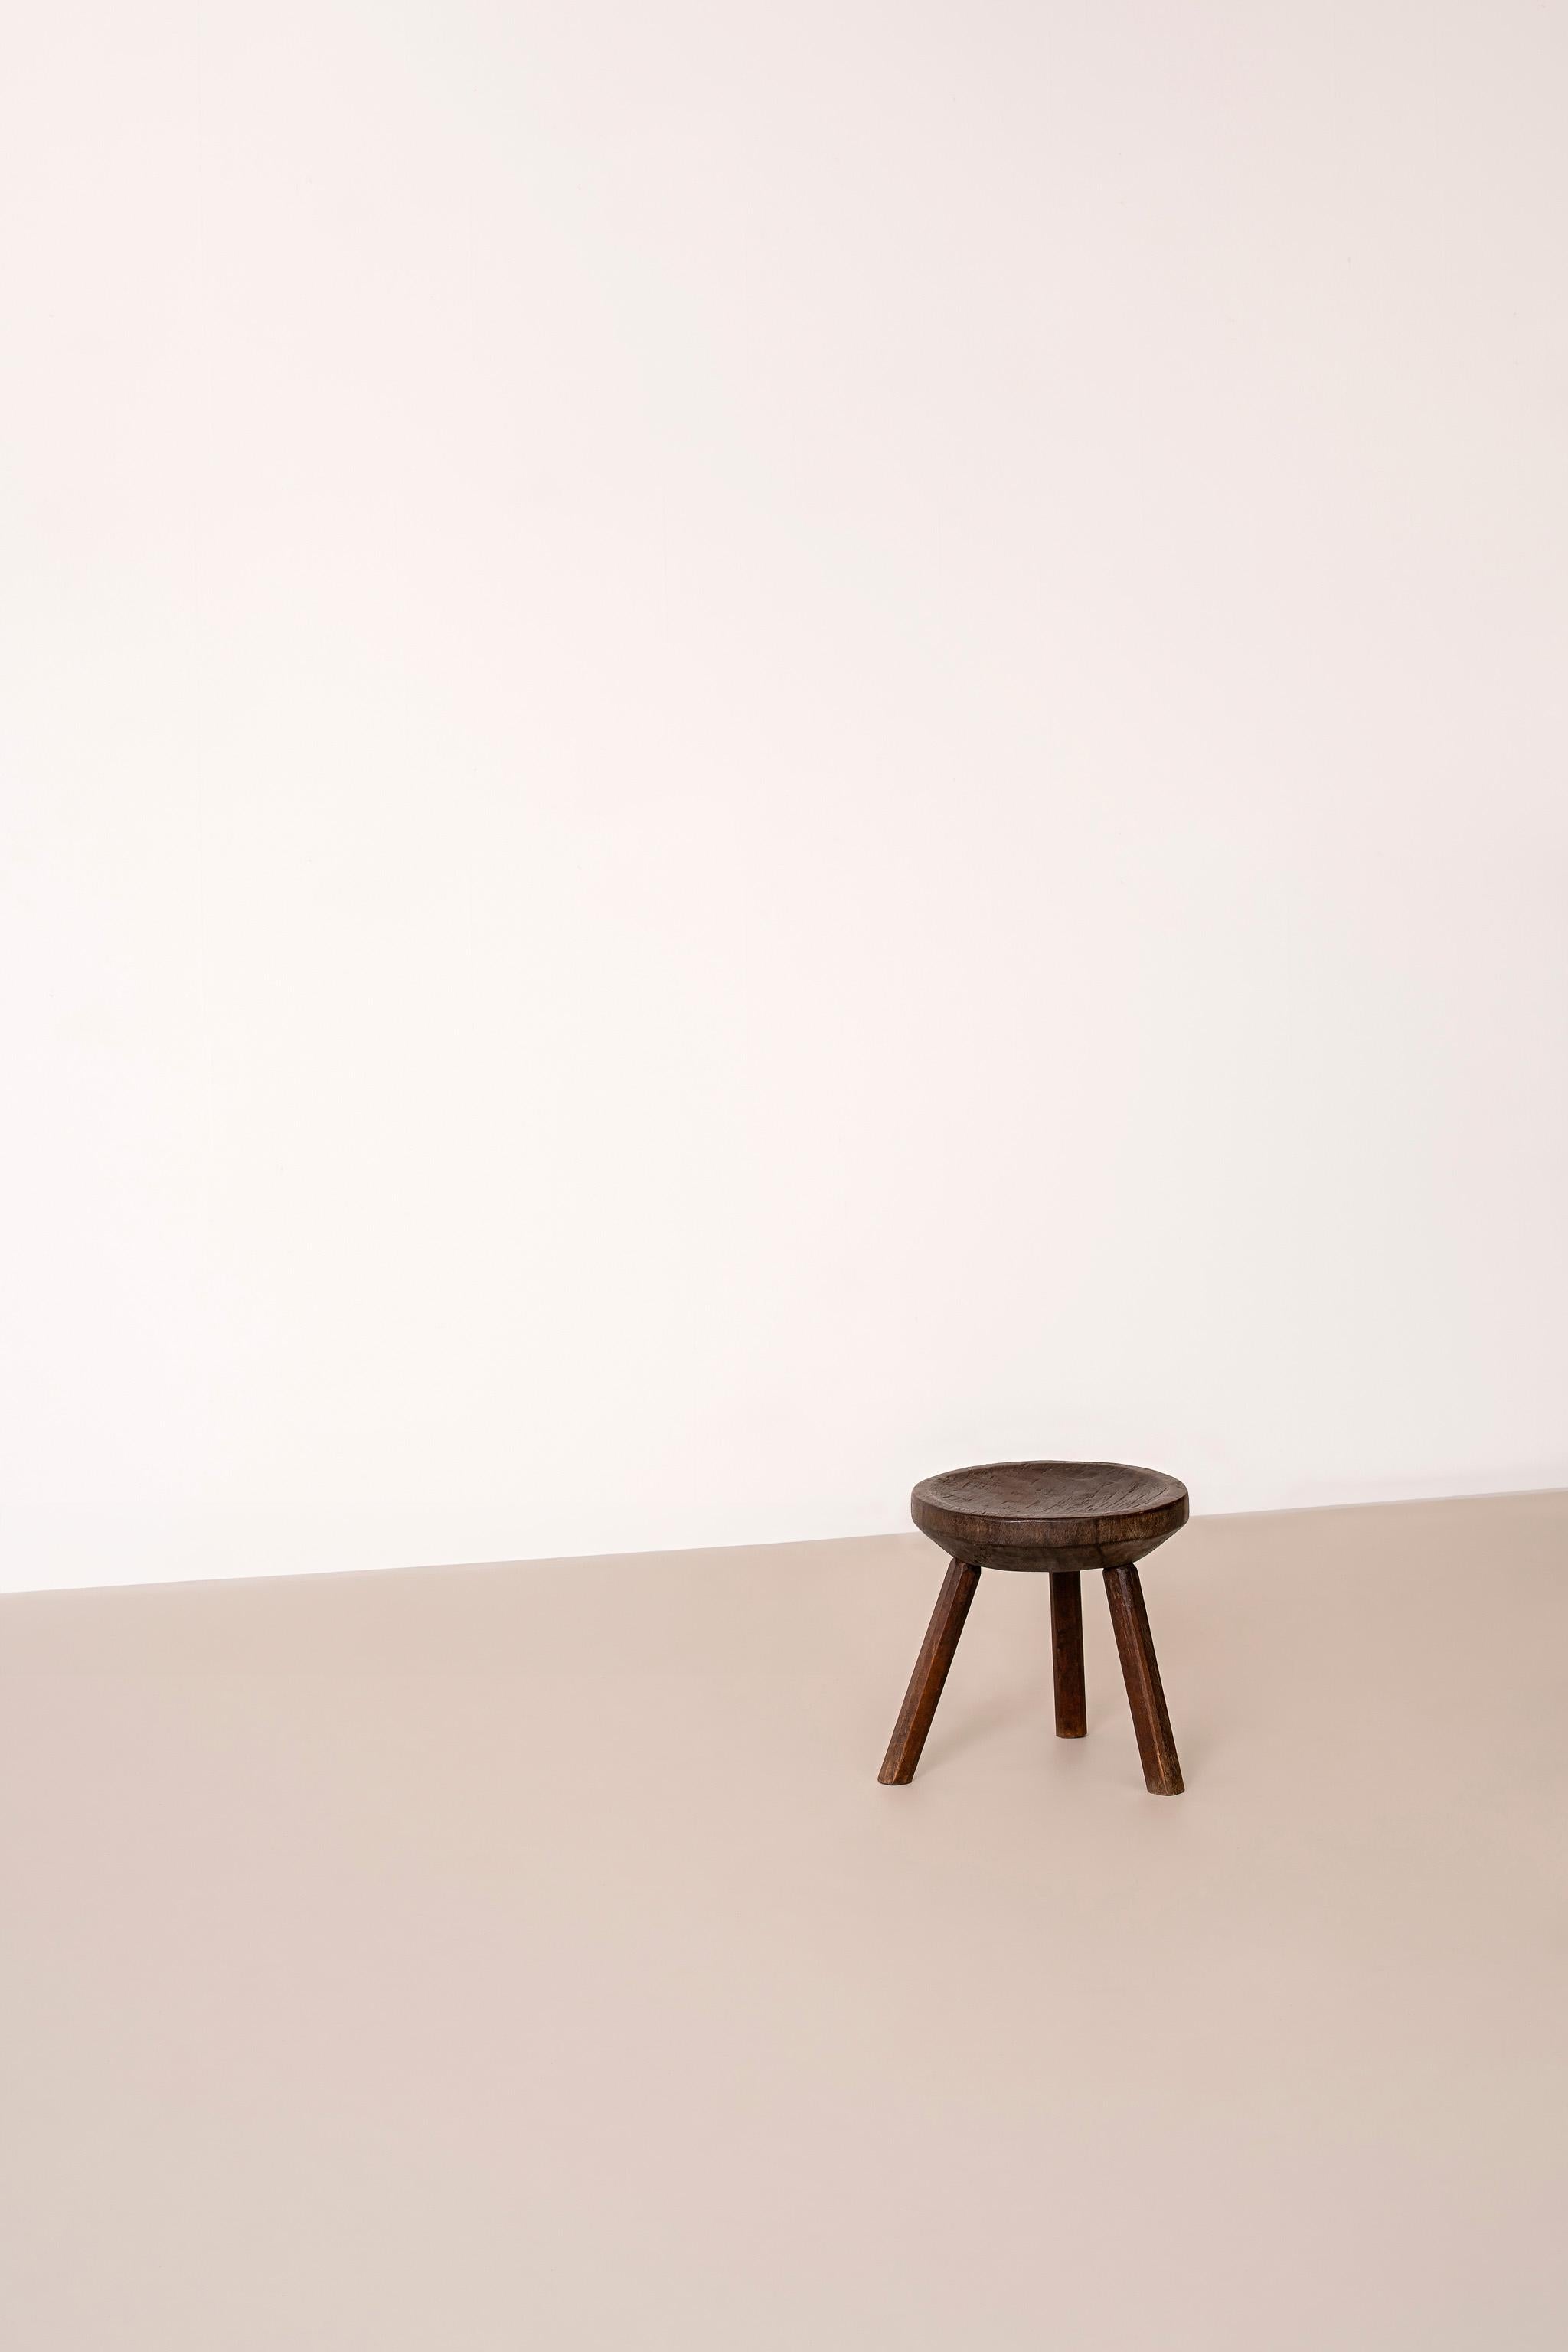 Brazilian vintage rustic three-legged stool in noble wood.